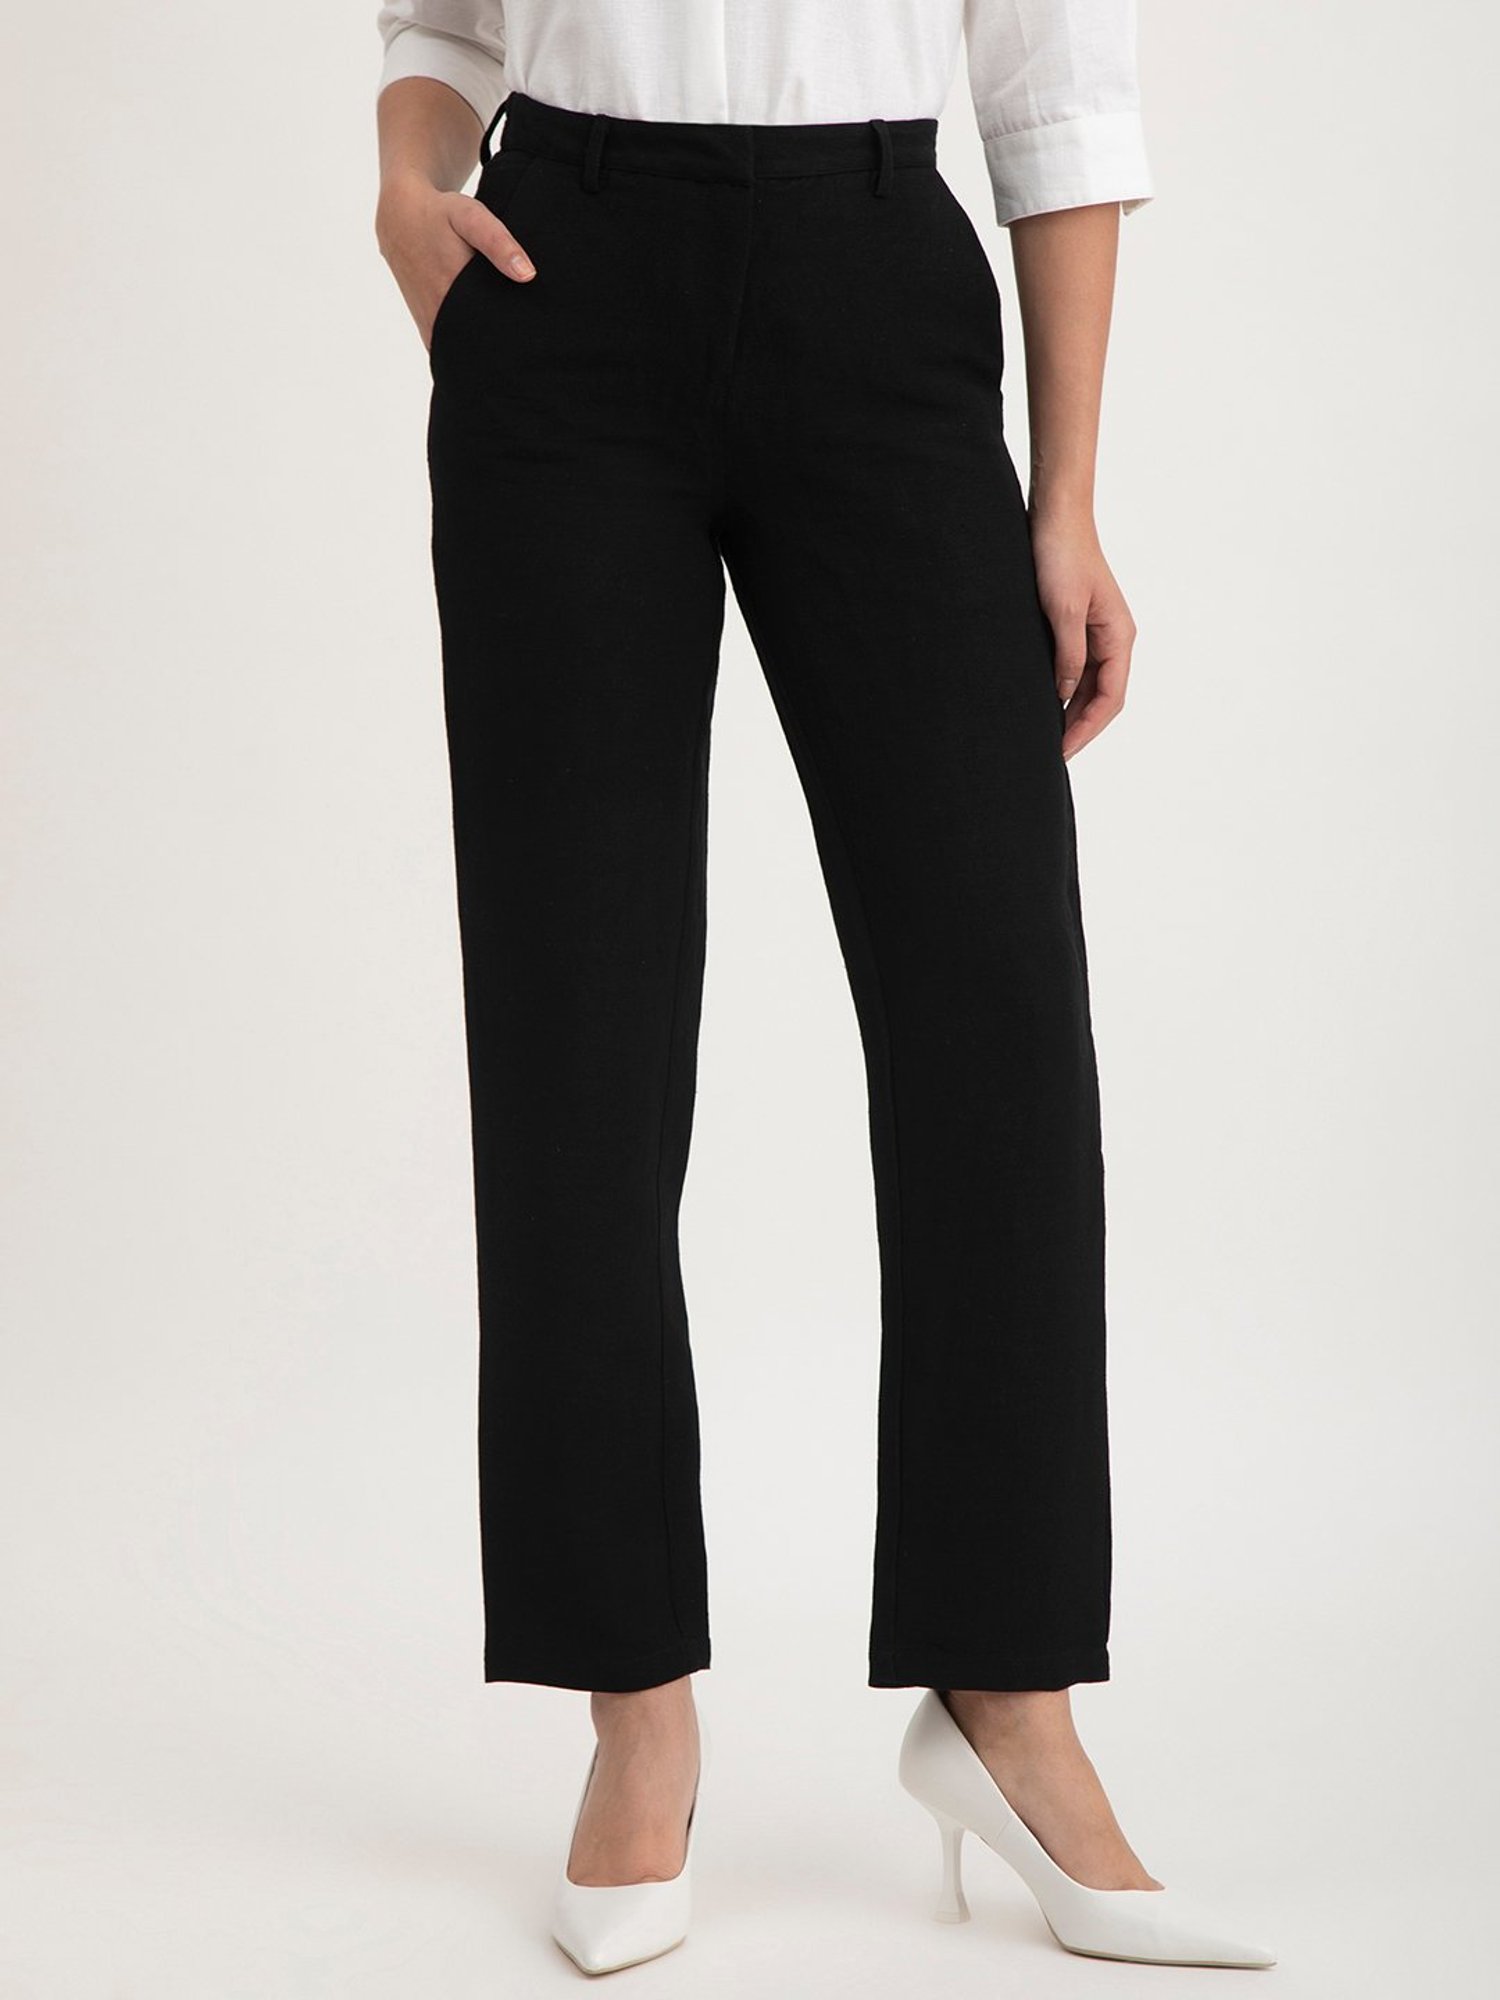 Buy Women's Black Straight Fit Trousers Online at Bewakoof